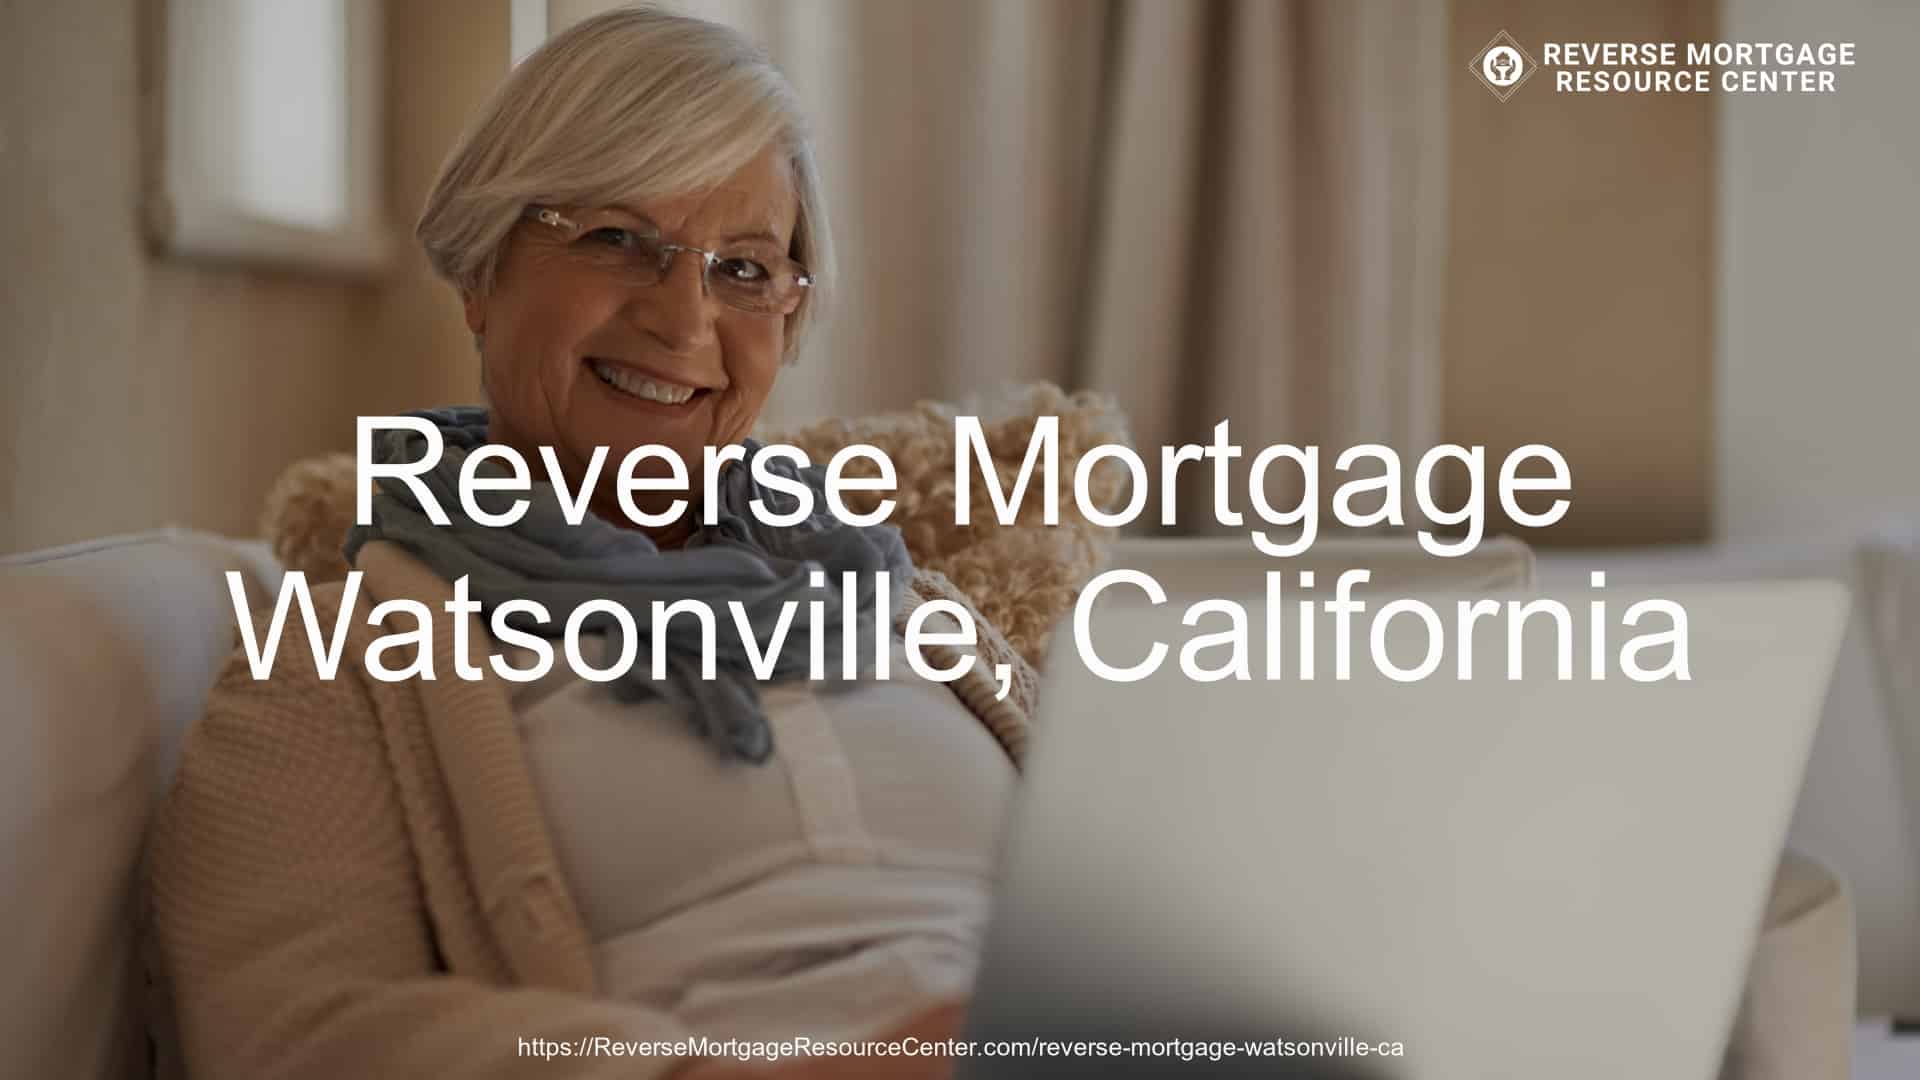 Reverse Mortgage in Watsonville, CA